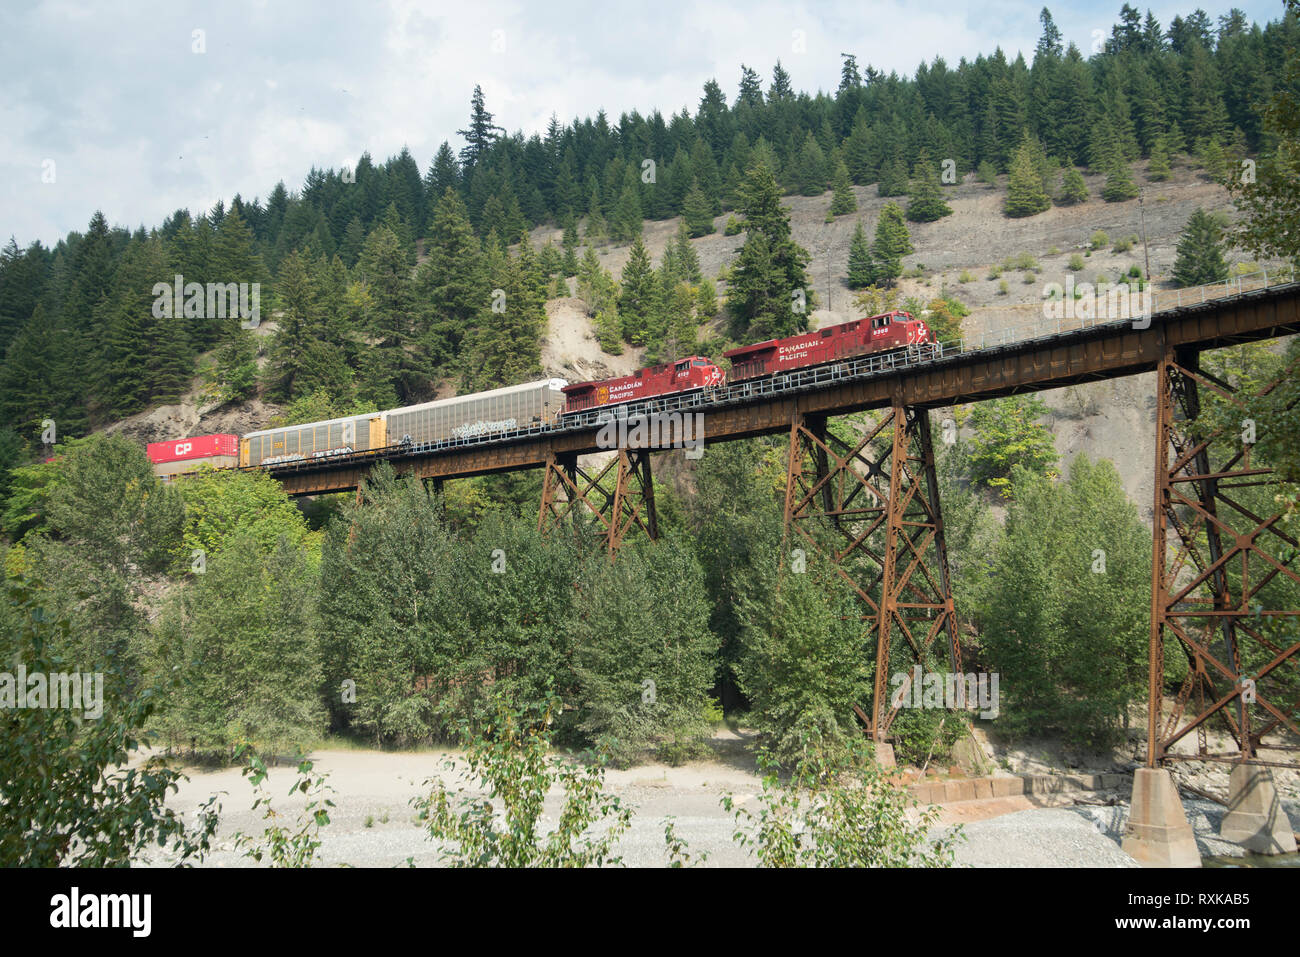 A CP (Canadian Pacific) freight train crosses Anderson Creek near Boston Bar, British Columbia, Canada. Stock Photo